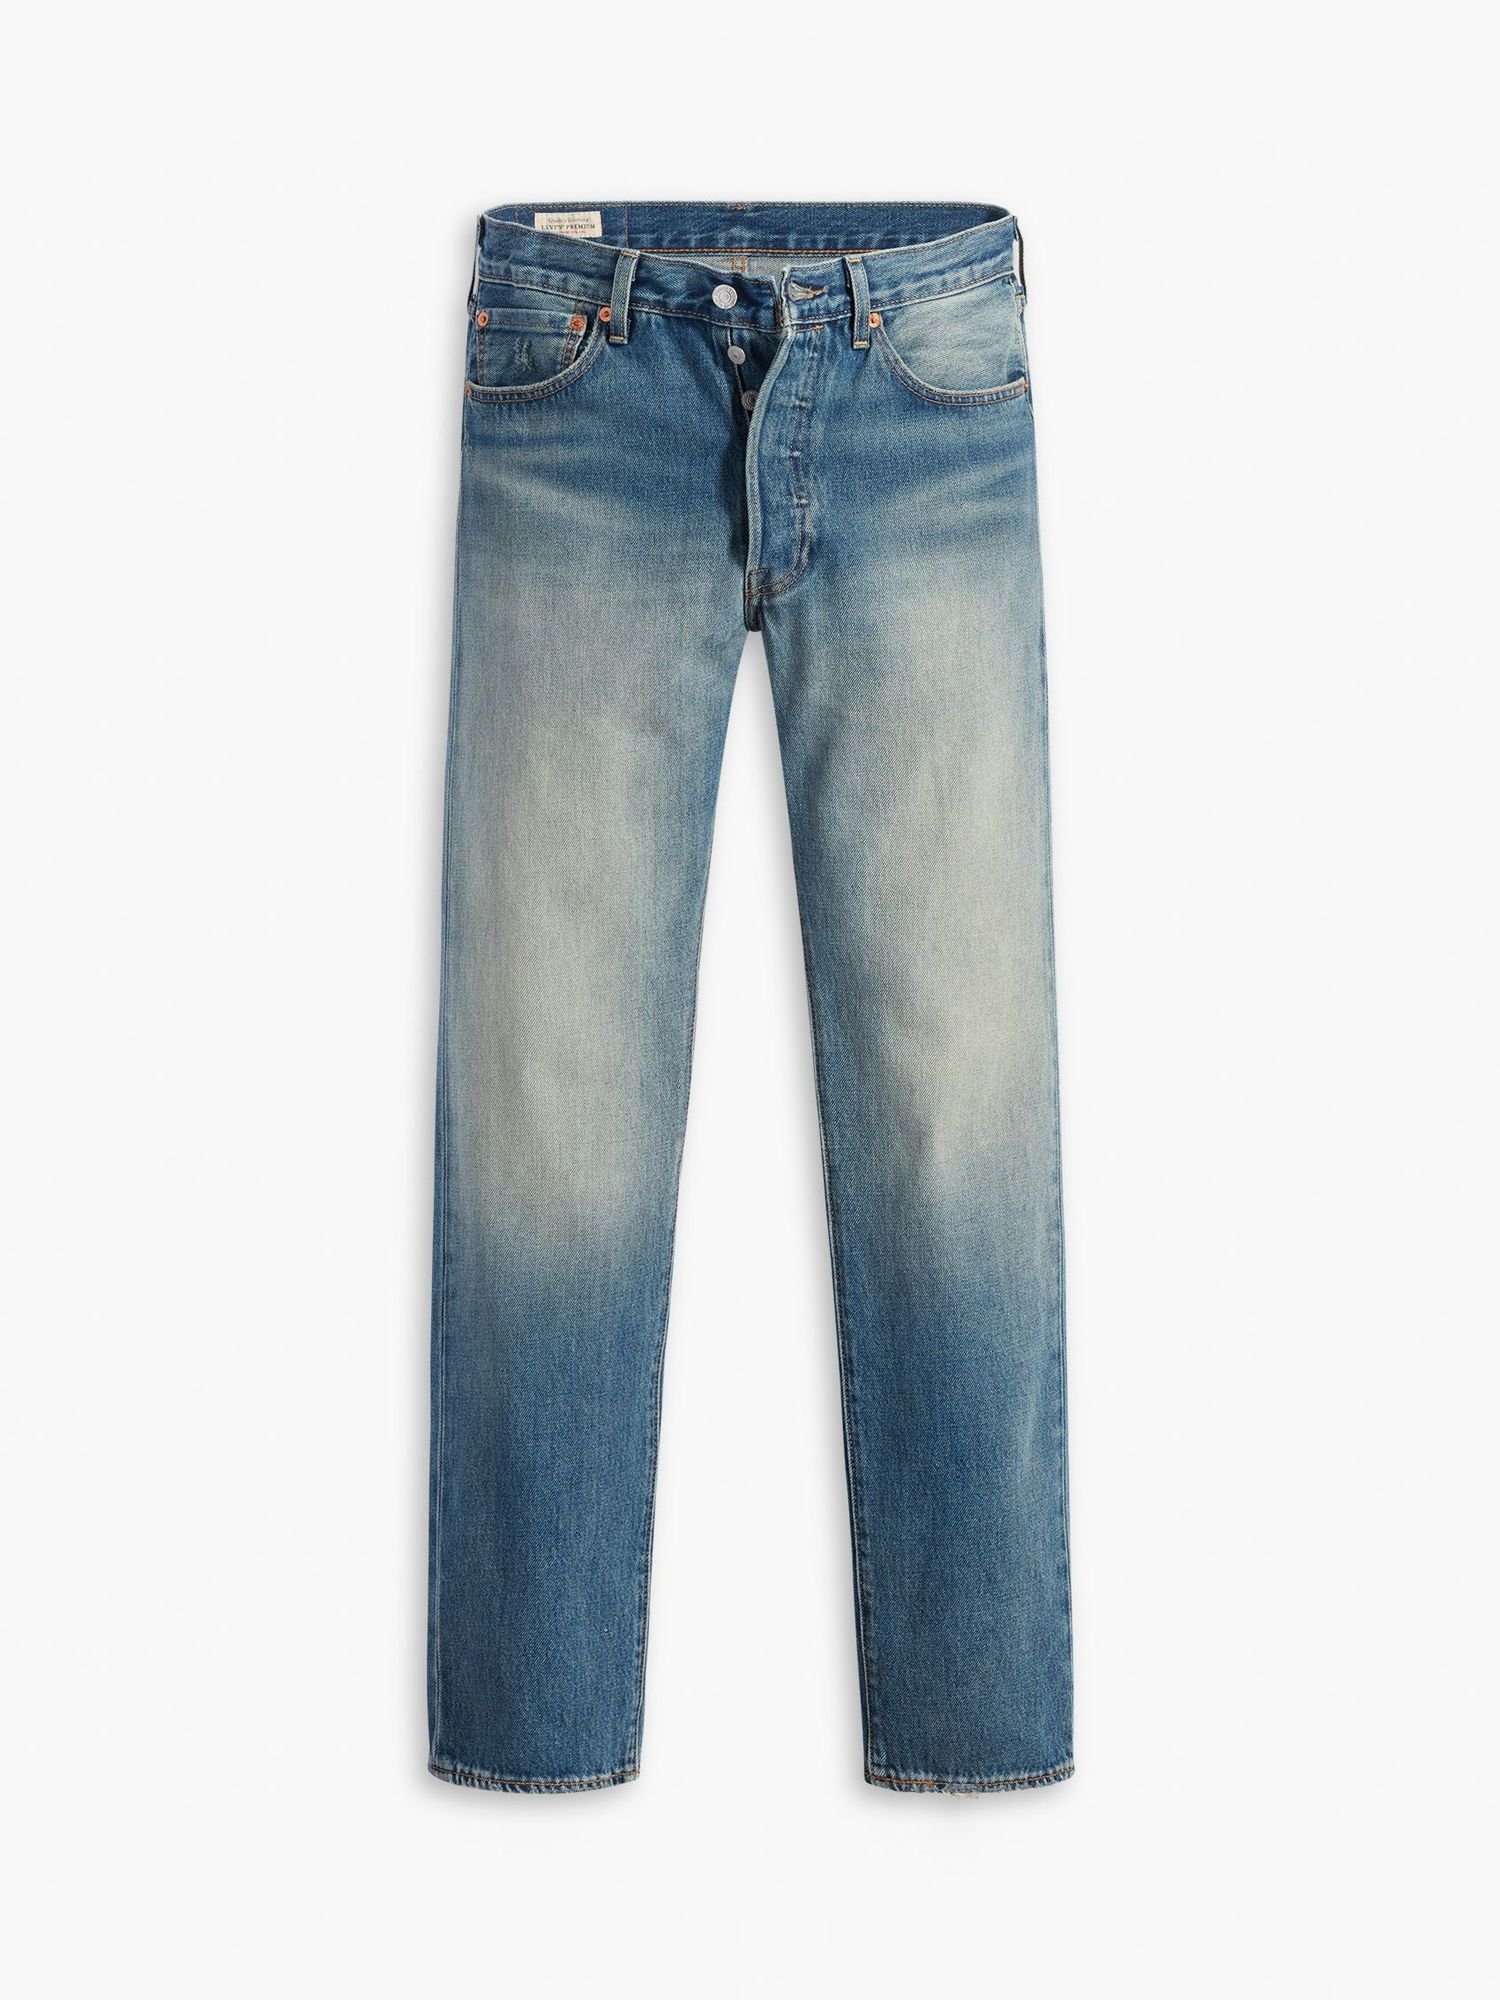 LEVI'S 501 Original Straight Jeans in Misty Lake